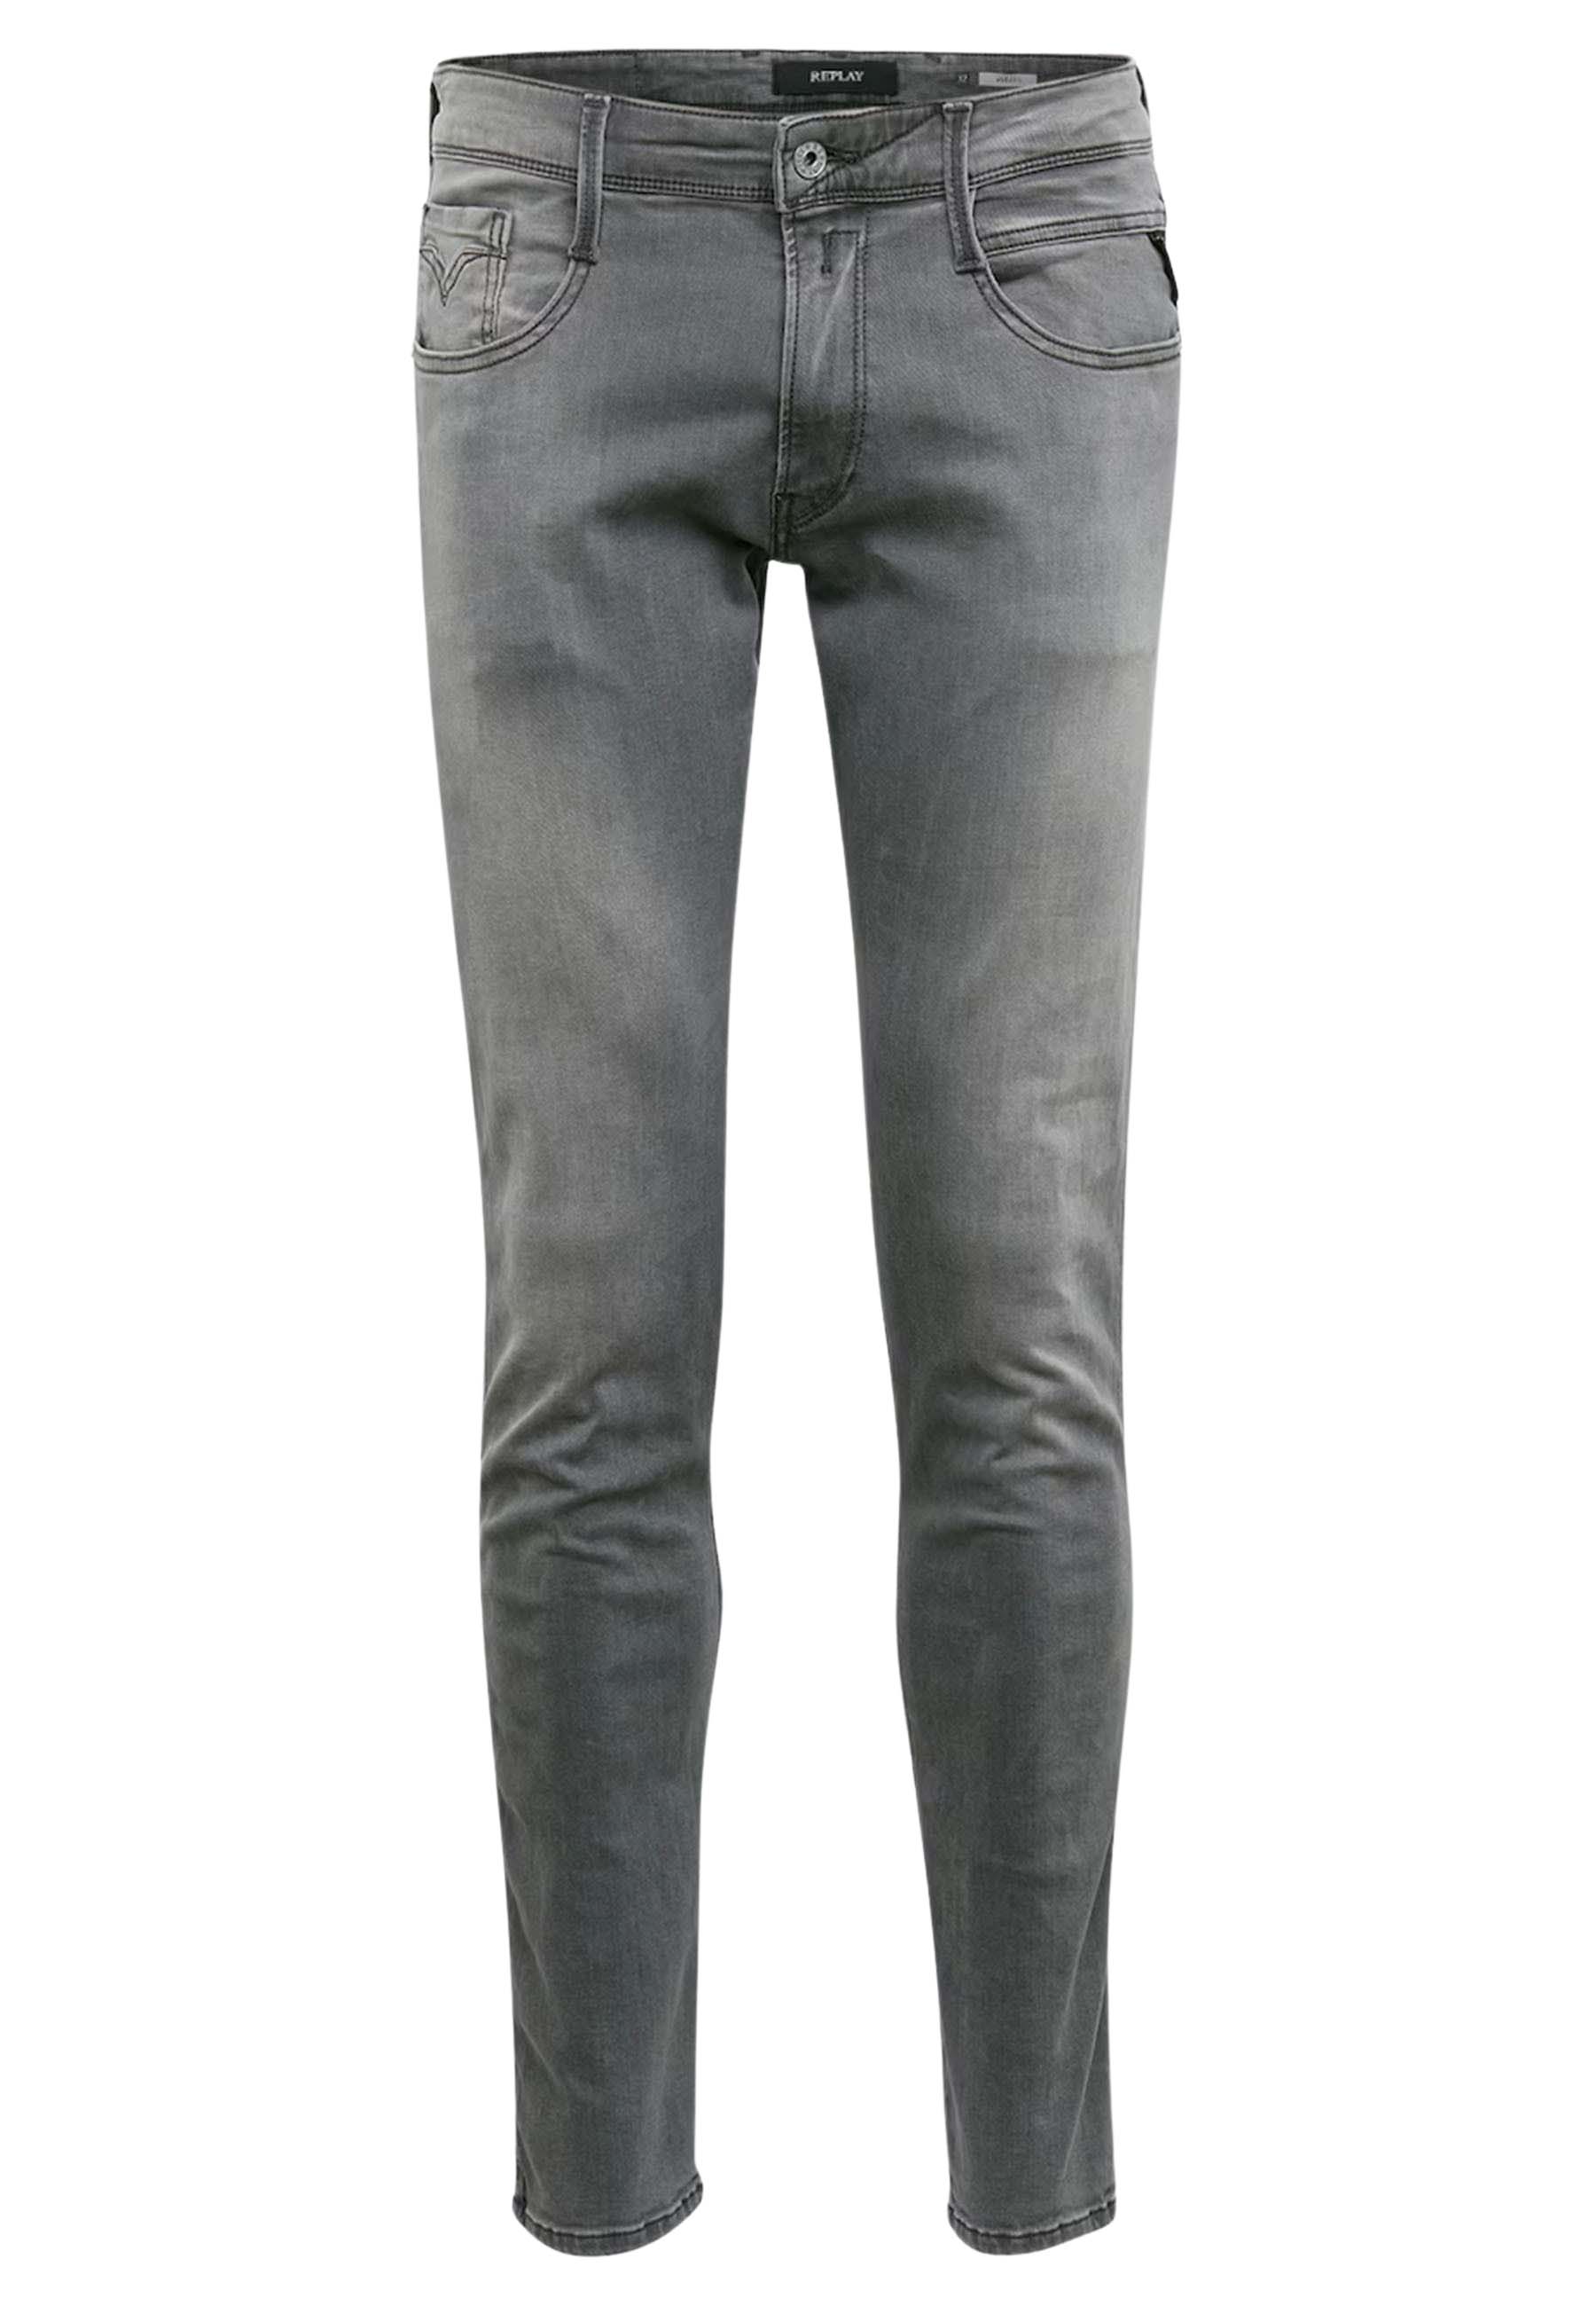 Replay Anbass jeans grijs Heren maat 36/34